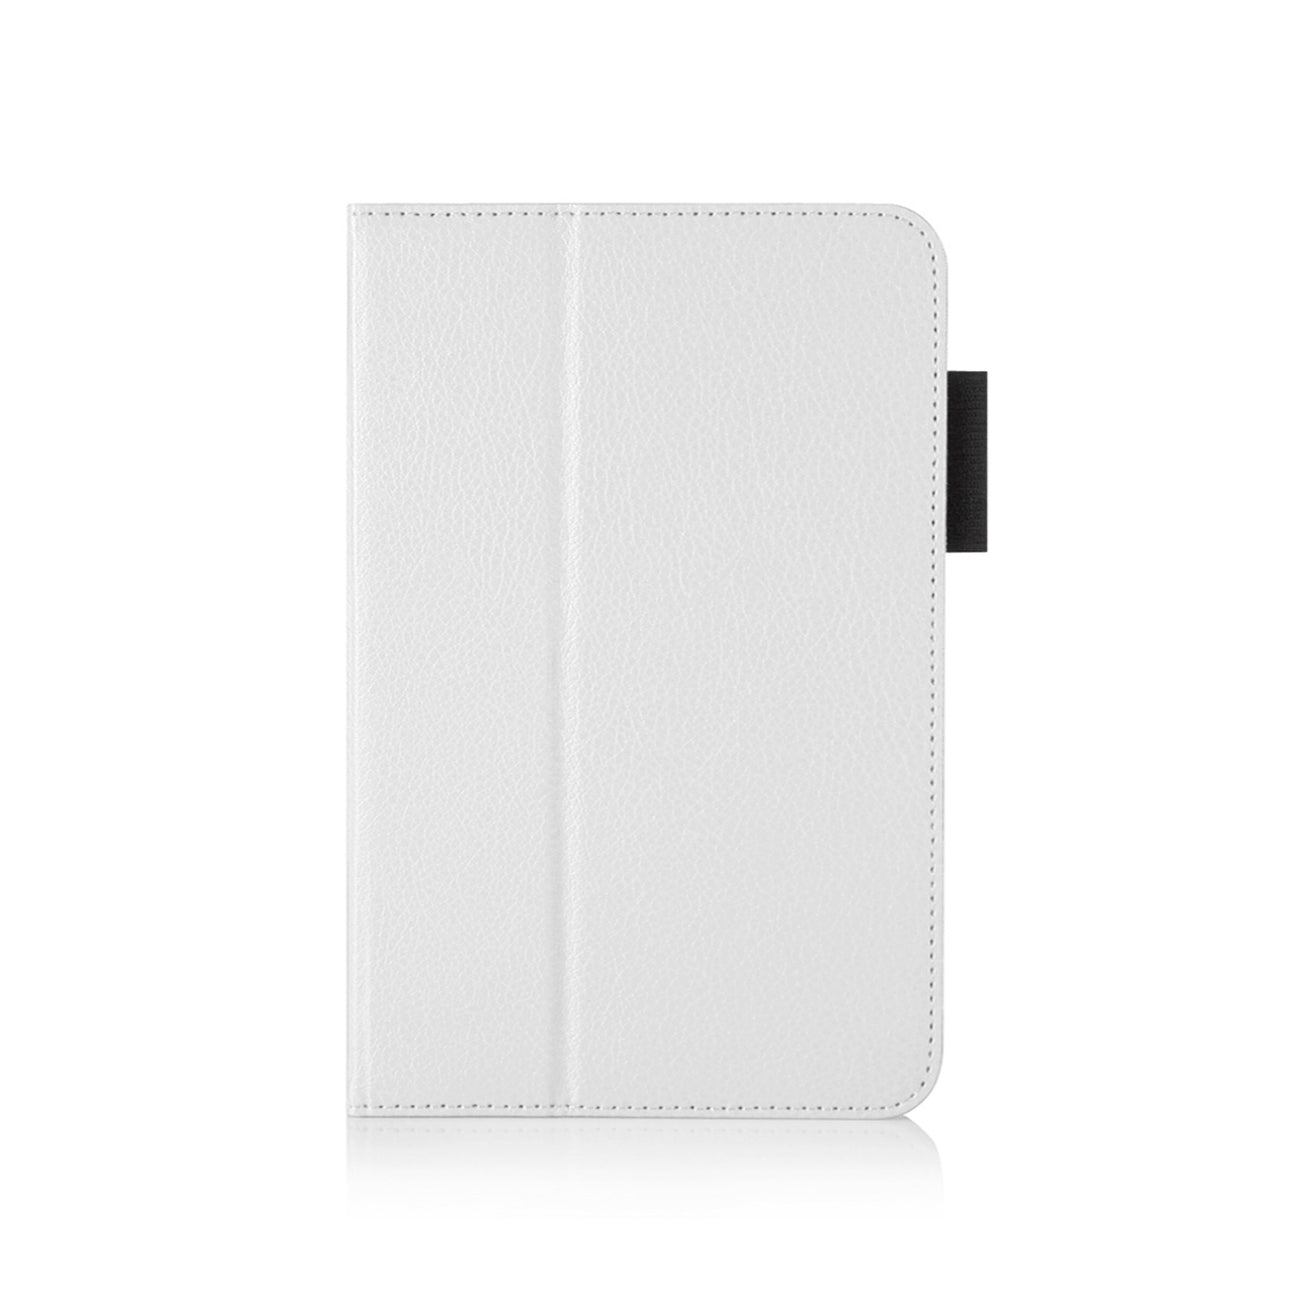 FREE - Amazon Kindle Fire HD 6 2014 Case White - Slim Folding Cover Case. - e4cents